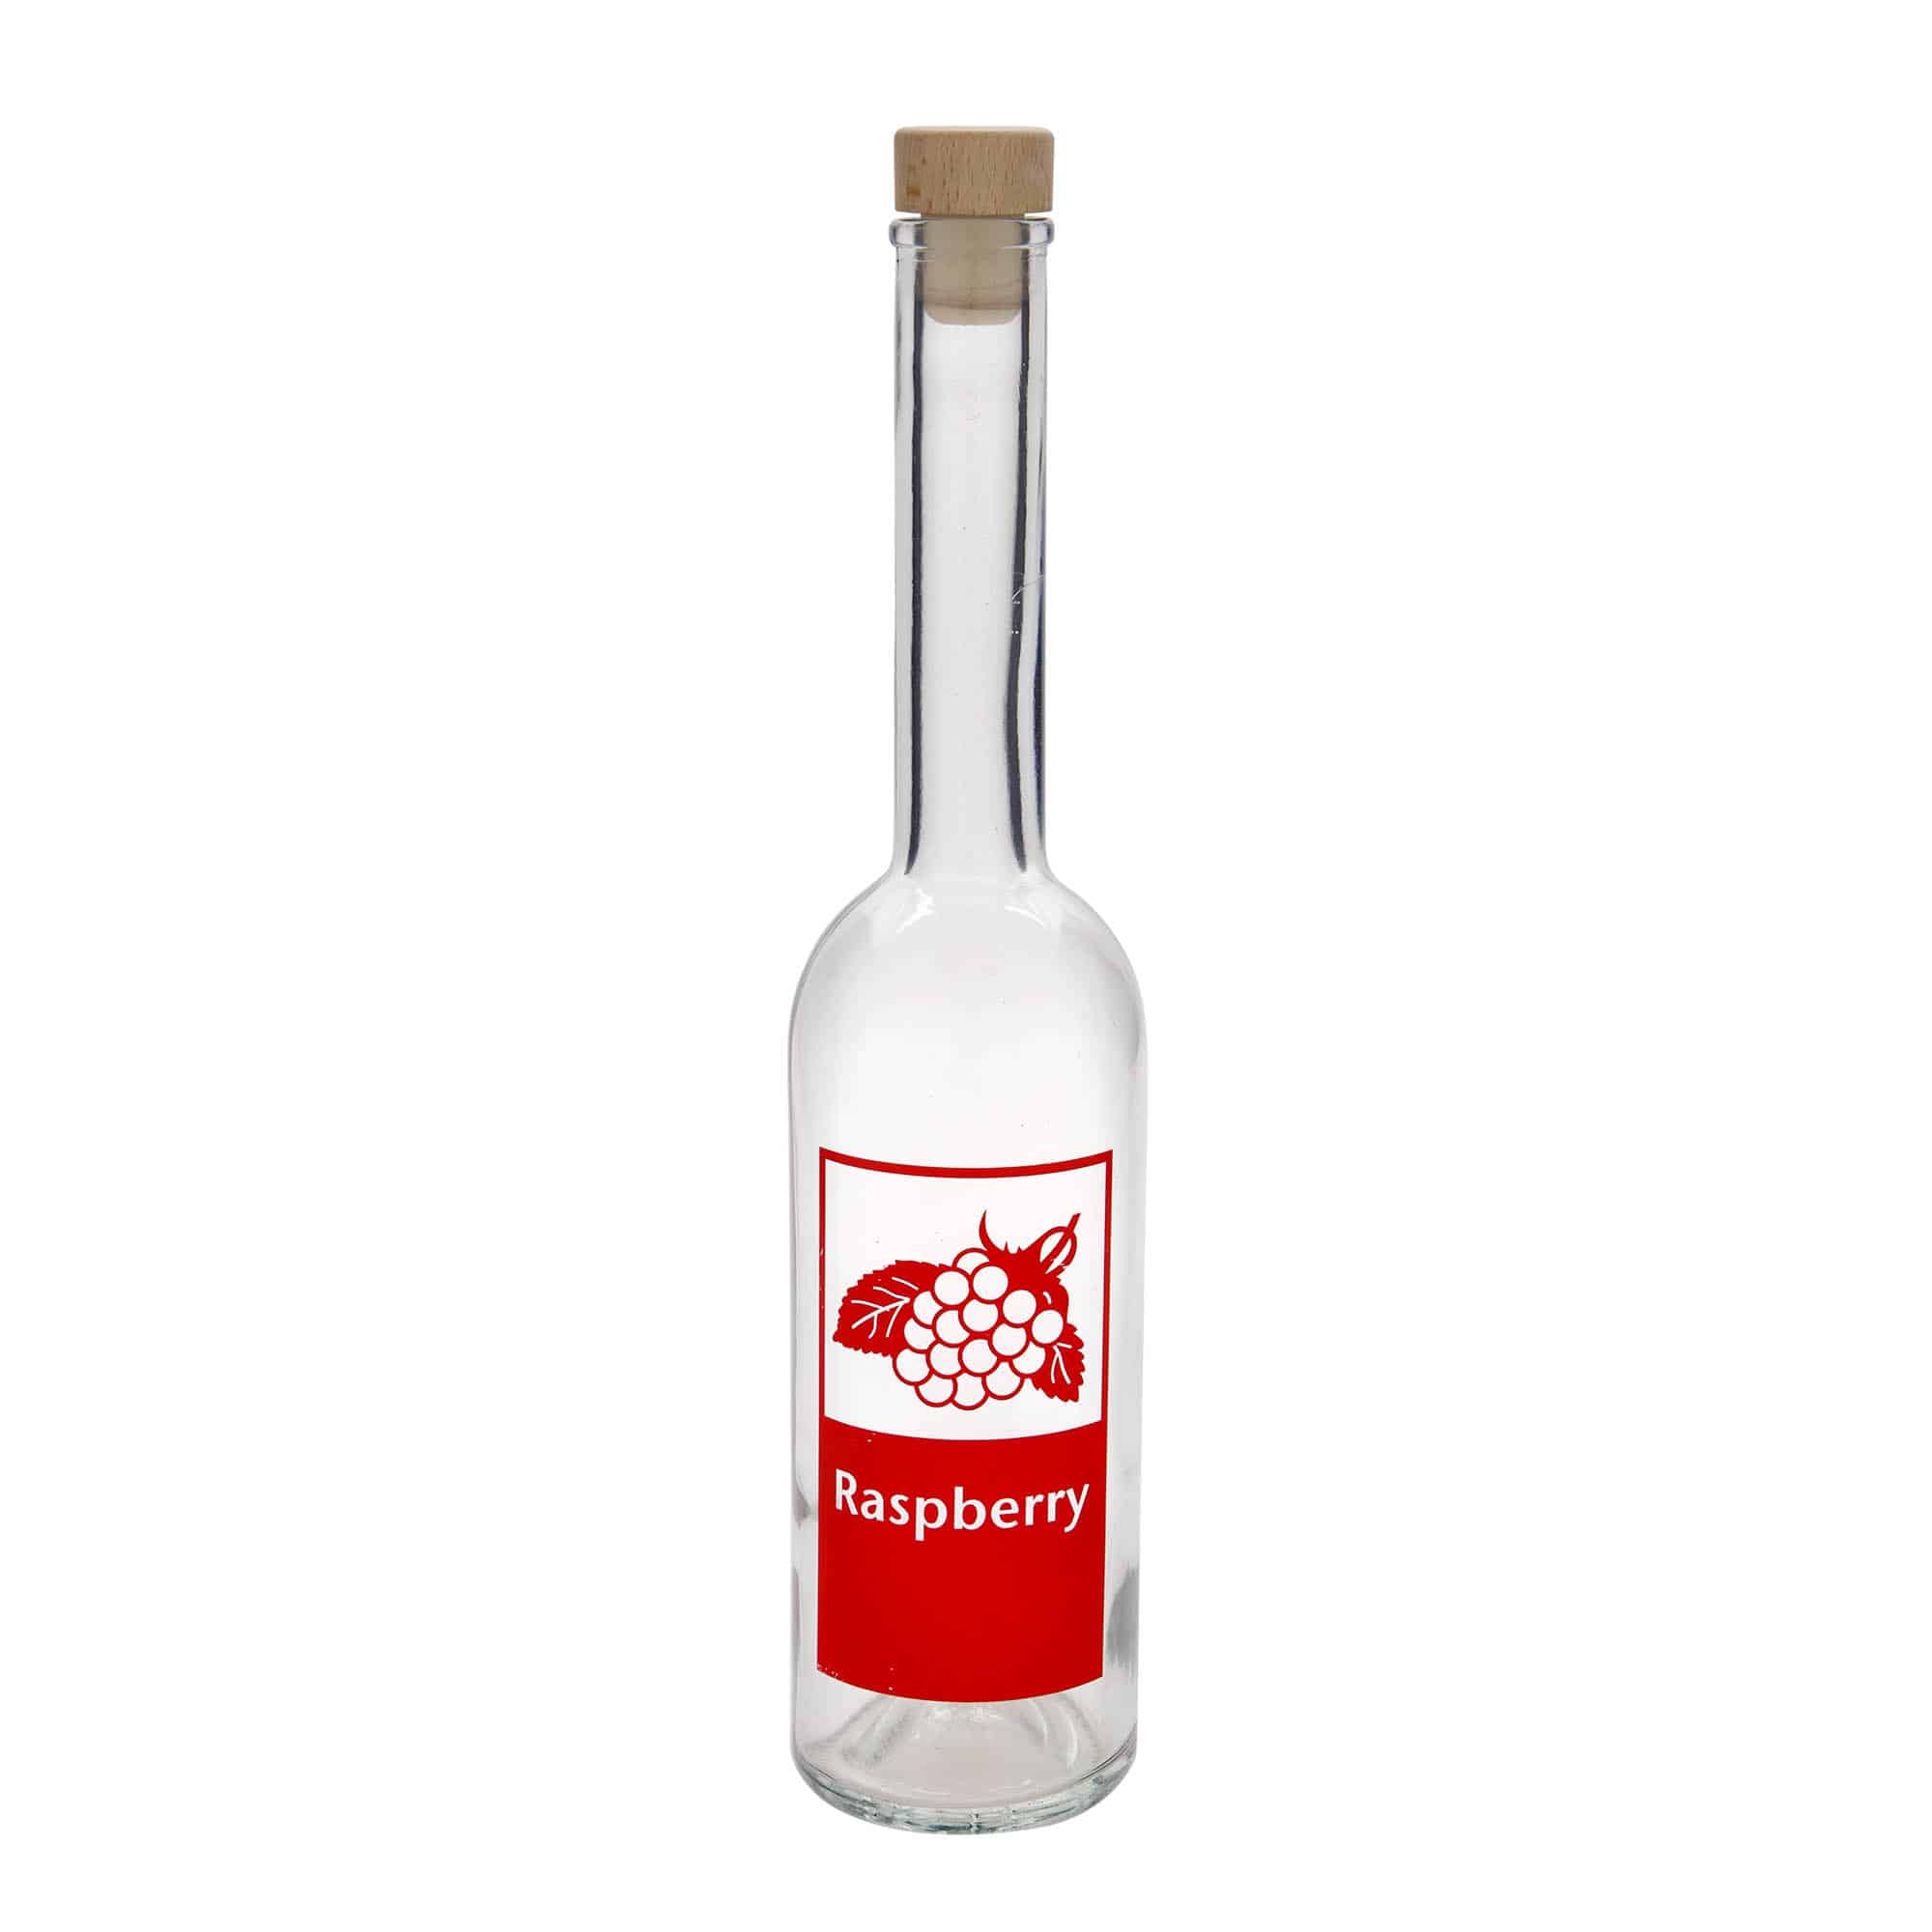 500 ml glass bottle 'Opera', print: Raspberry, closure: cork